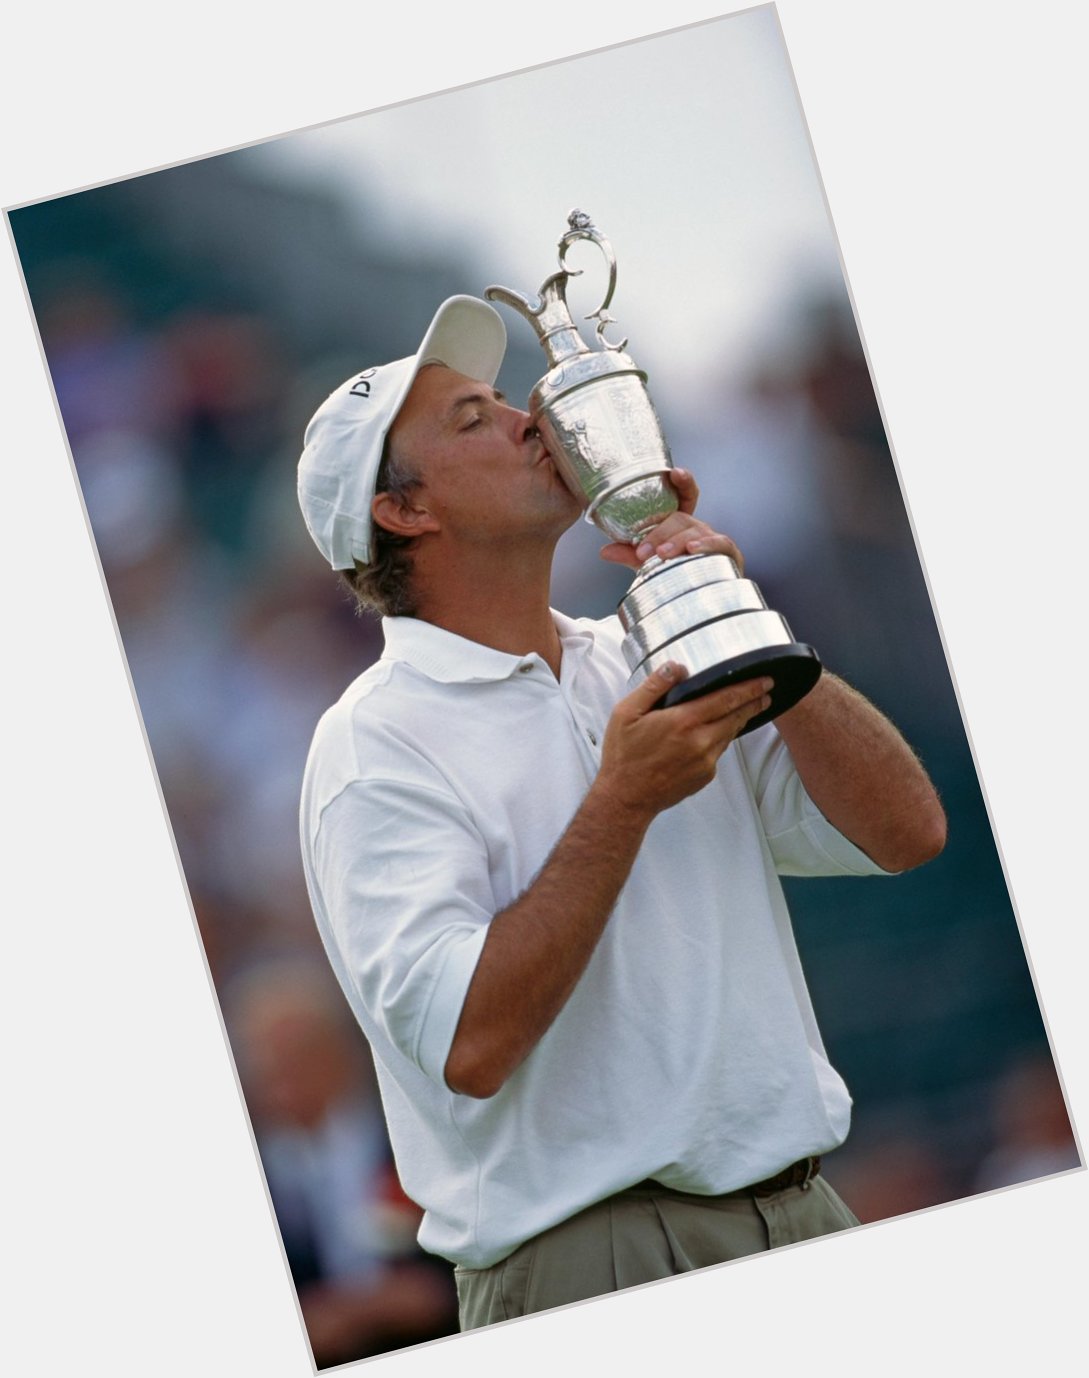 Happy Birthday to Tom Lehman, winner of the 1996 Open at 